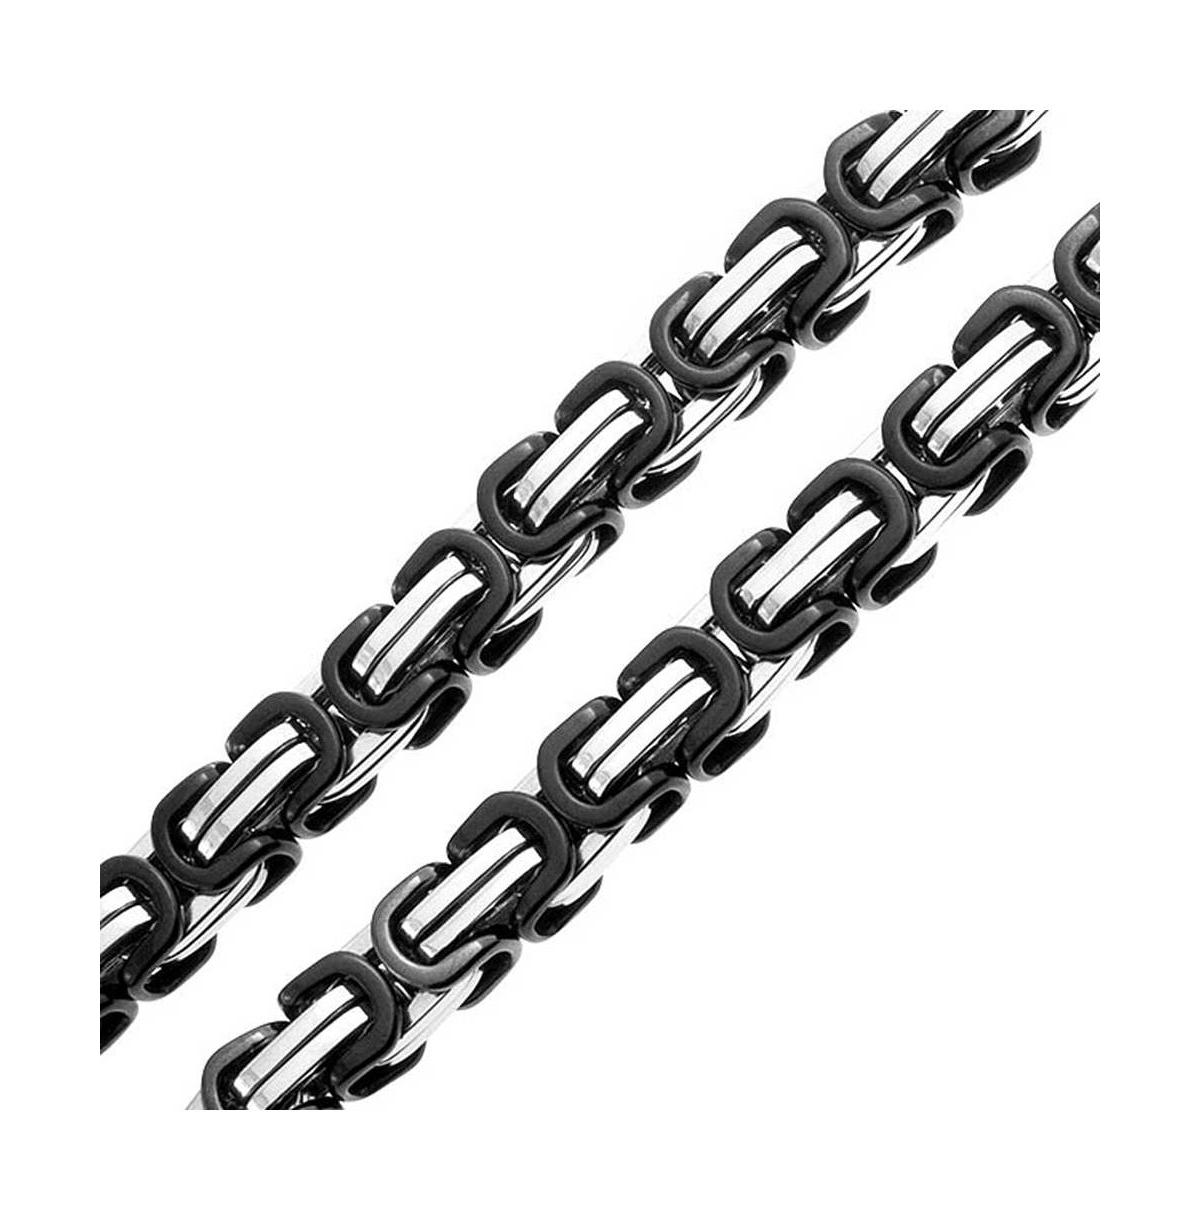 Mechanic Byzantine Biker Jewelry Urban Double link Flexible Heavy Chain Necklace For Men For Stainless Steel - Black